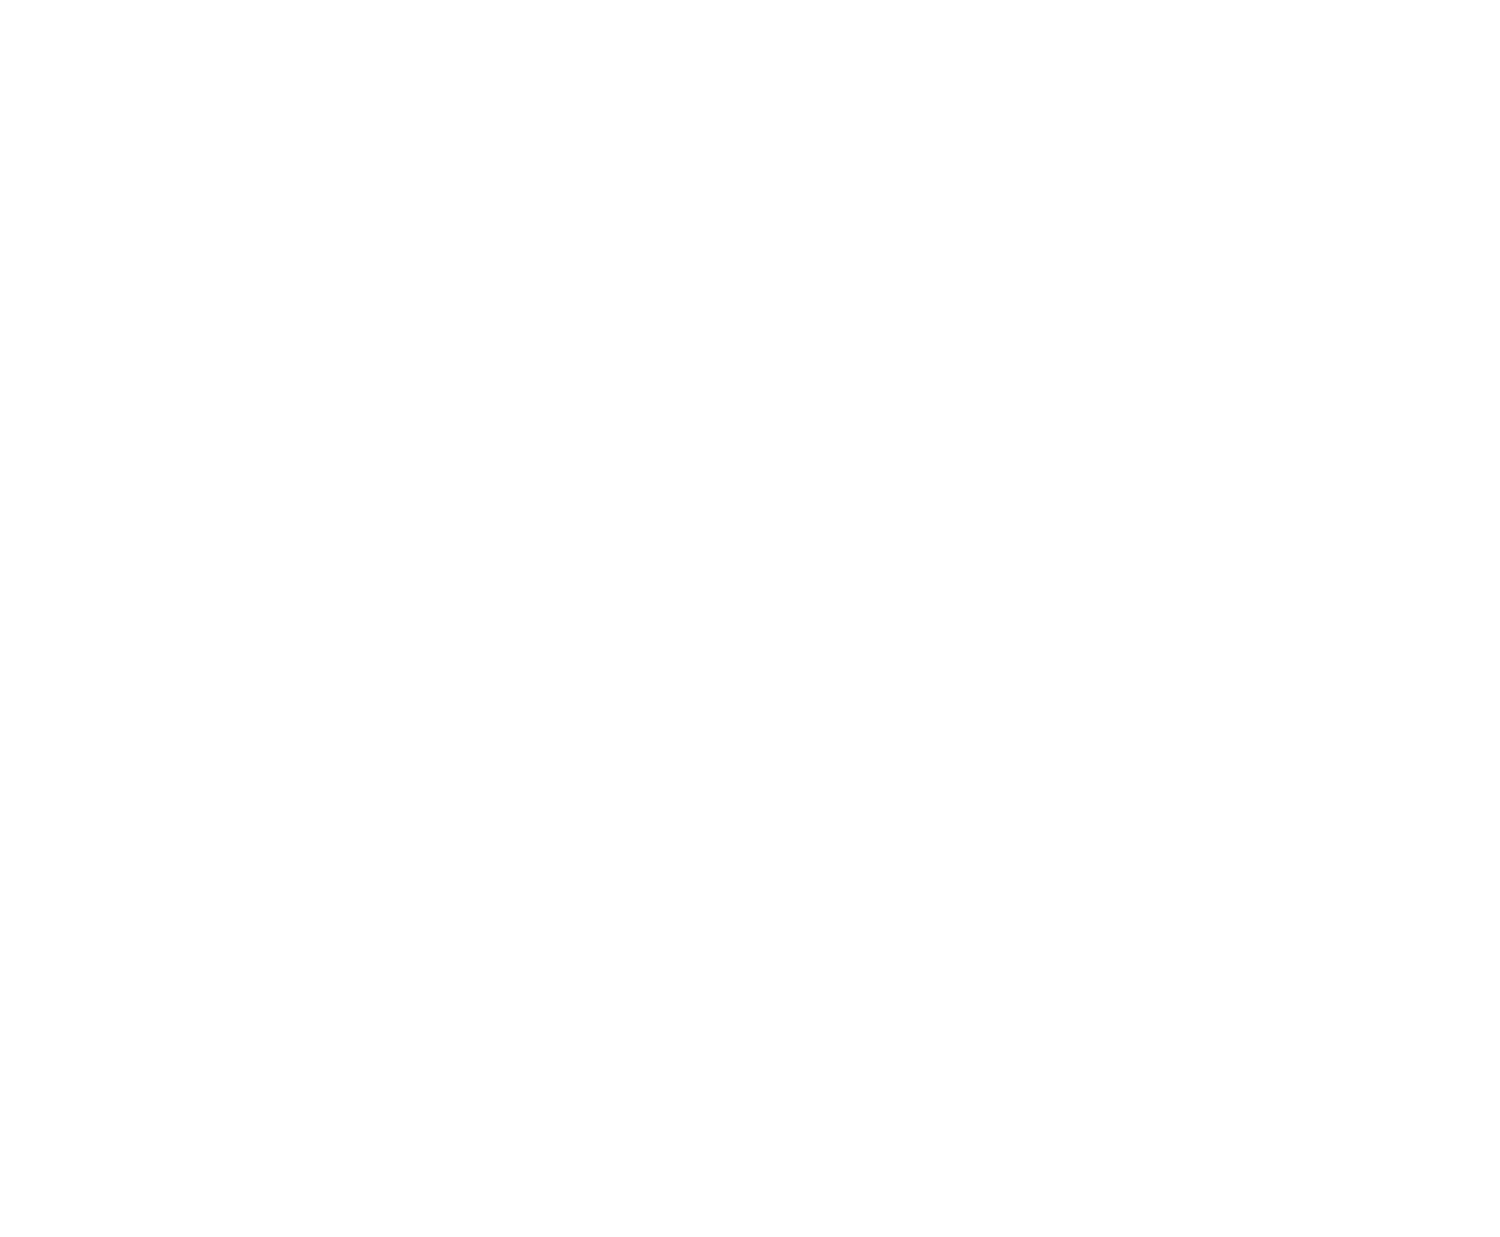 Global Lighting Perspectives